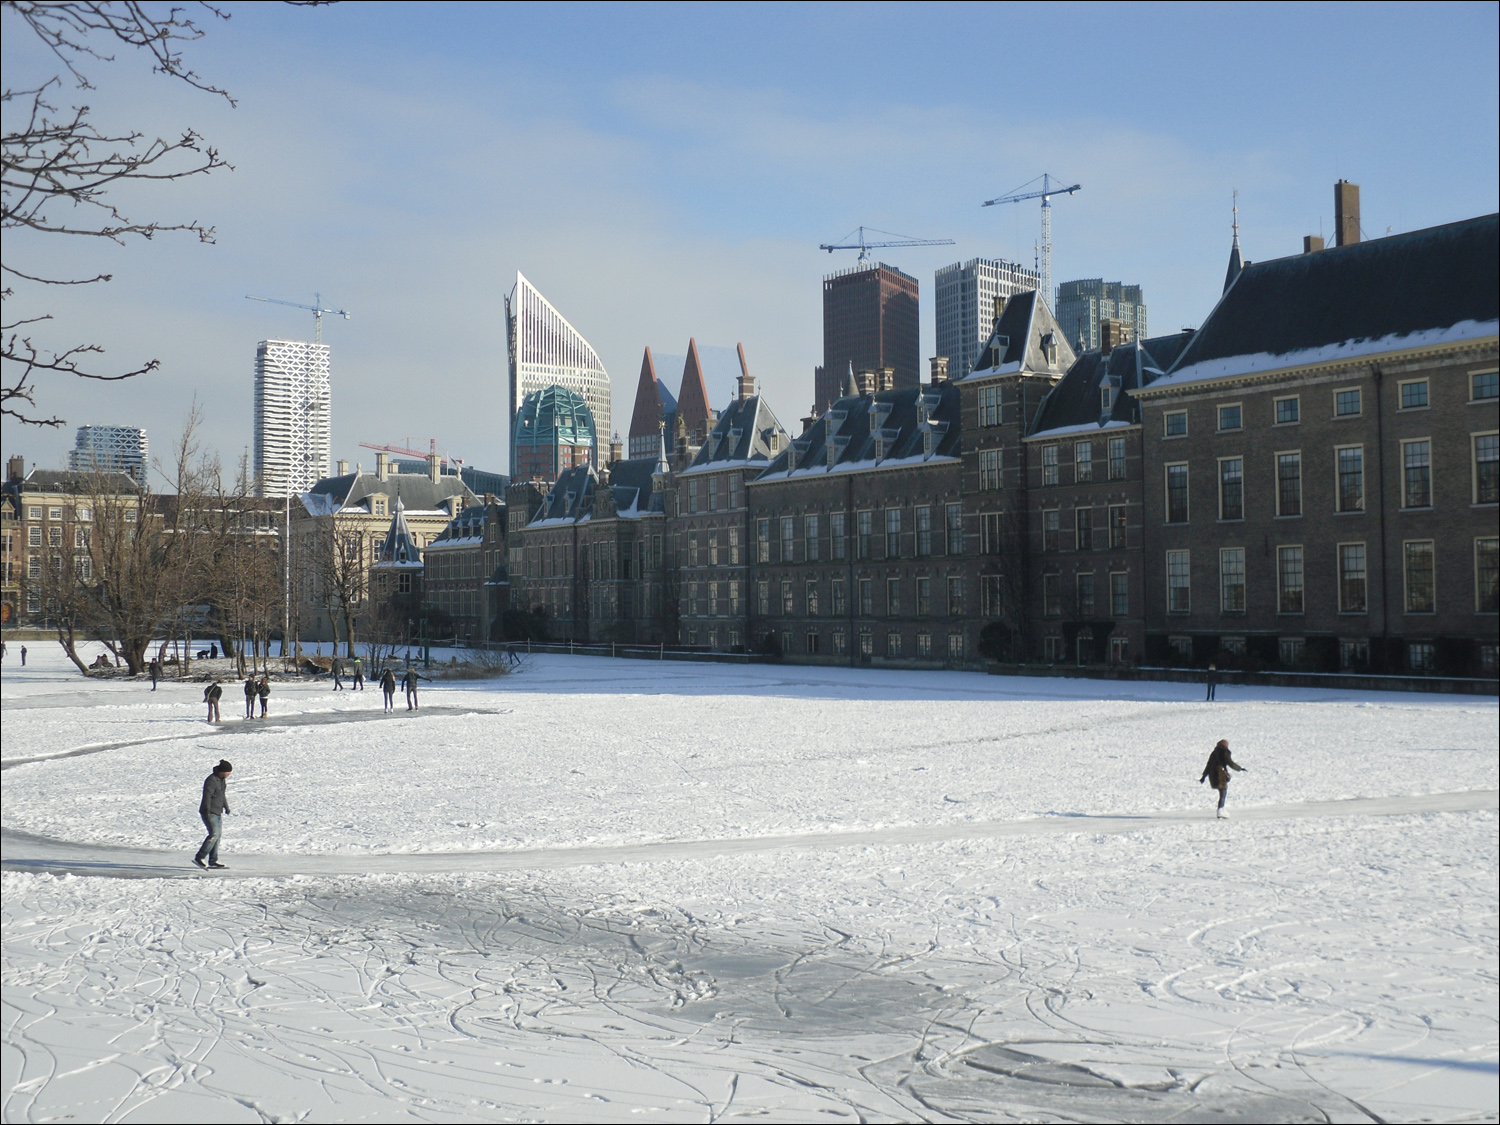 Hague-skaters on frozen lake next to Binnenhof